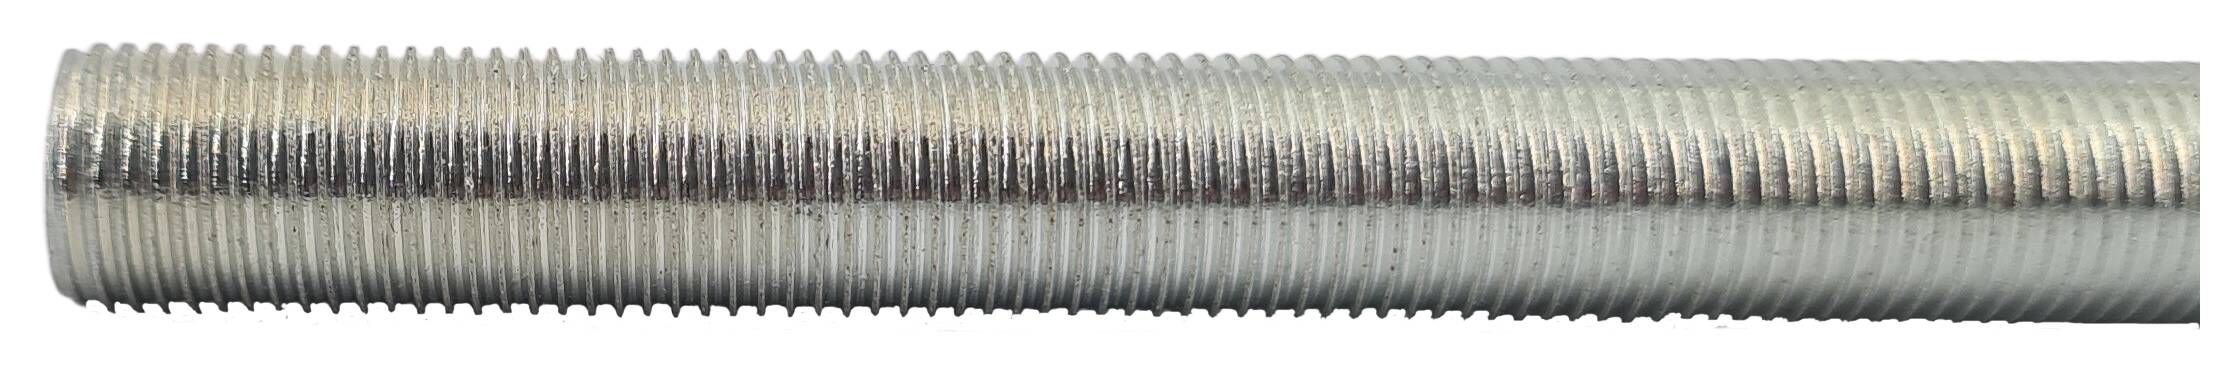 iron thread tube M10x1x200 round zinc